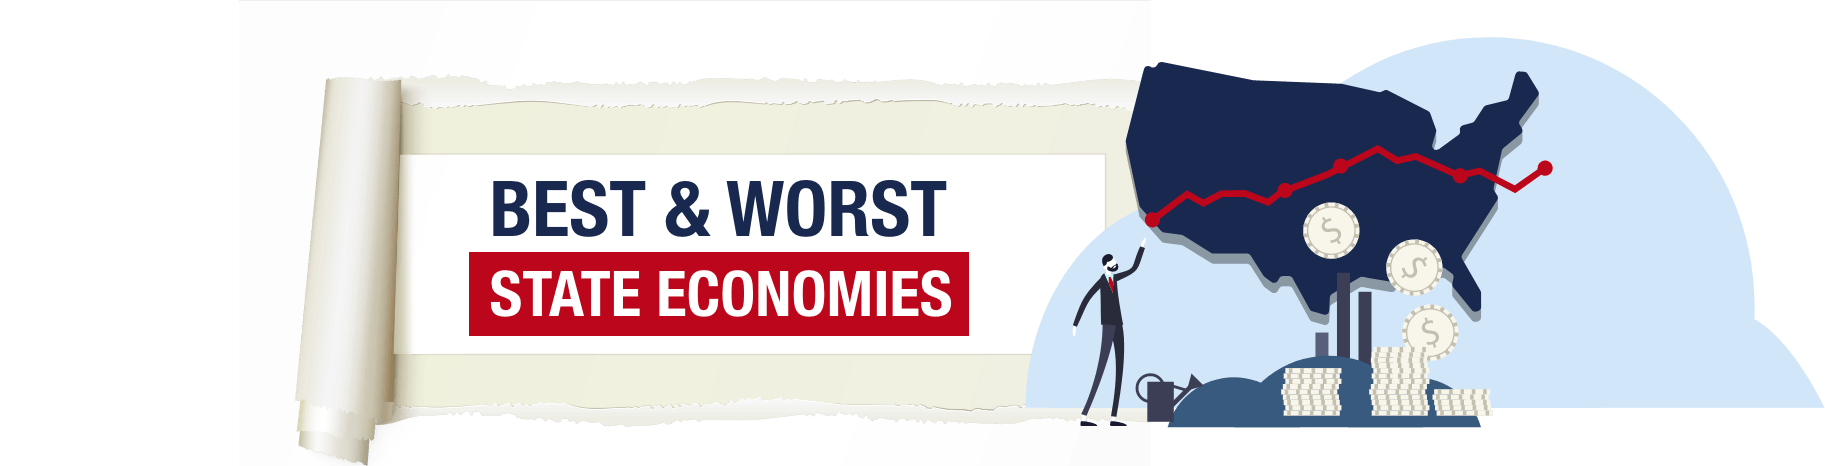 Best & Worst State Economies